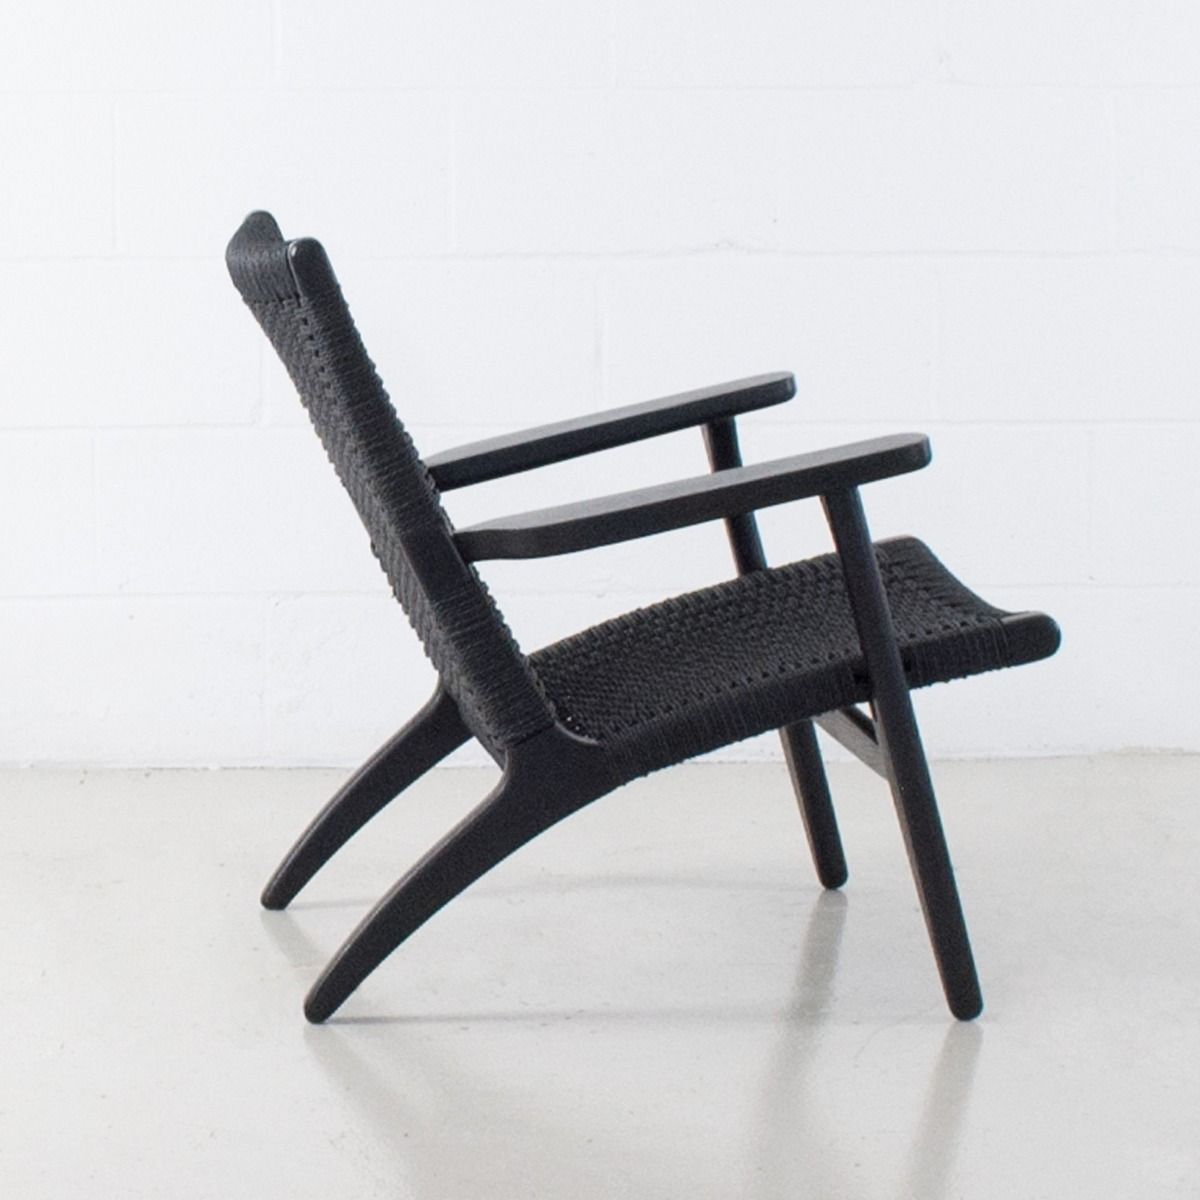 Cavo Black Lounge Chair